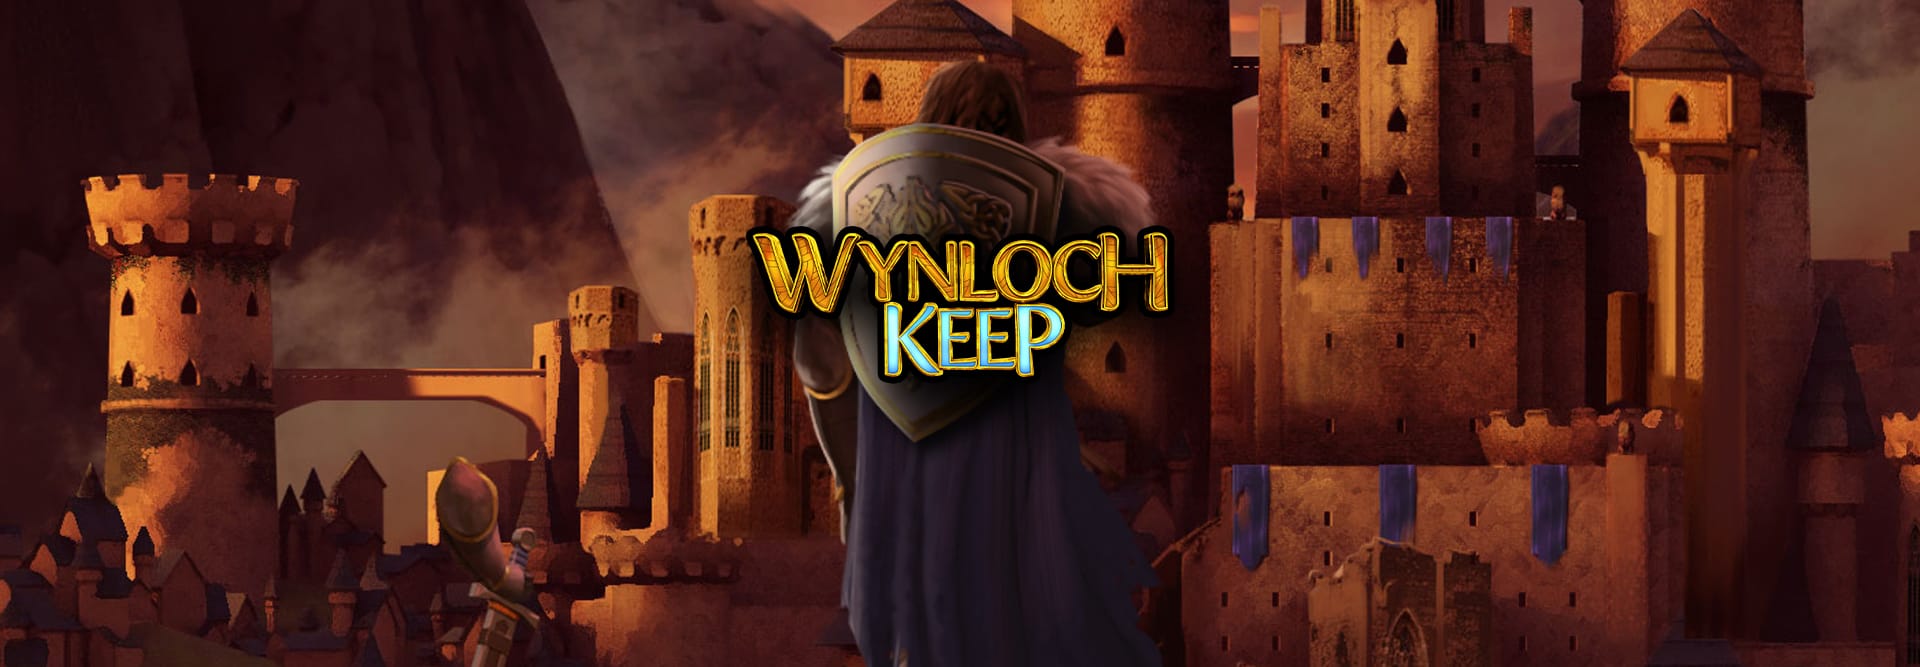 Wynloch Keep Online Slot